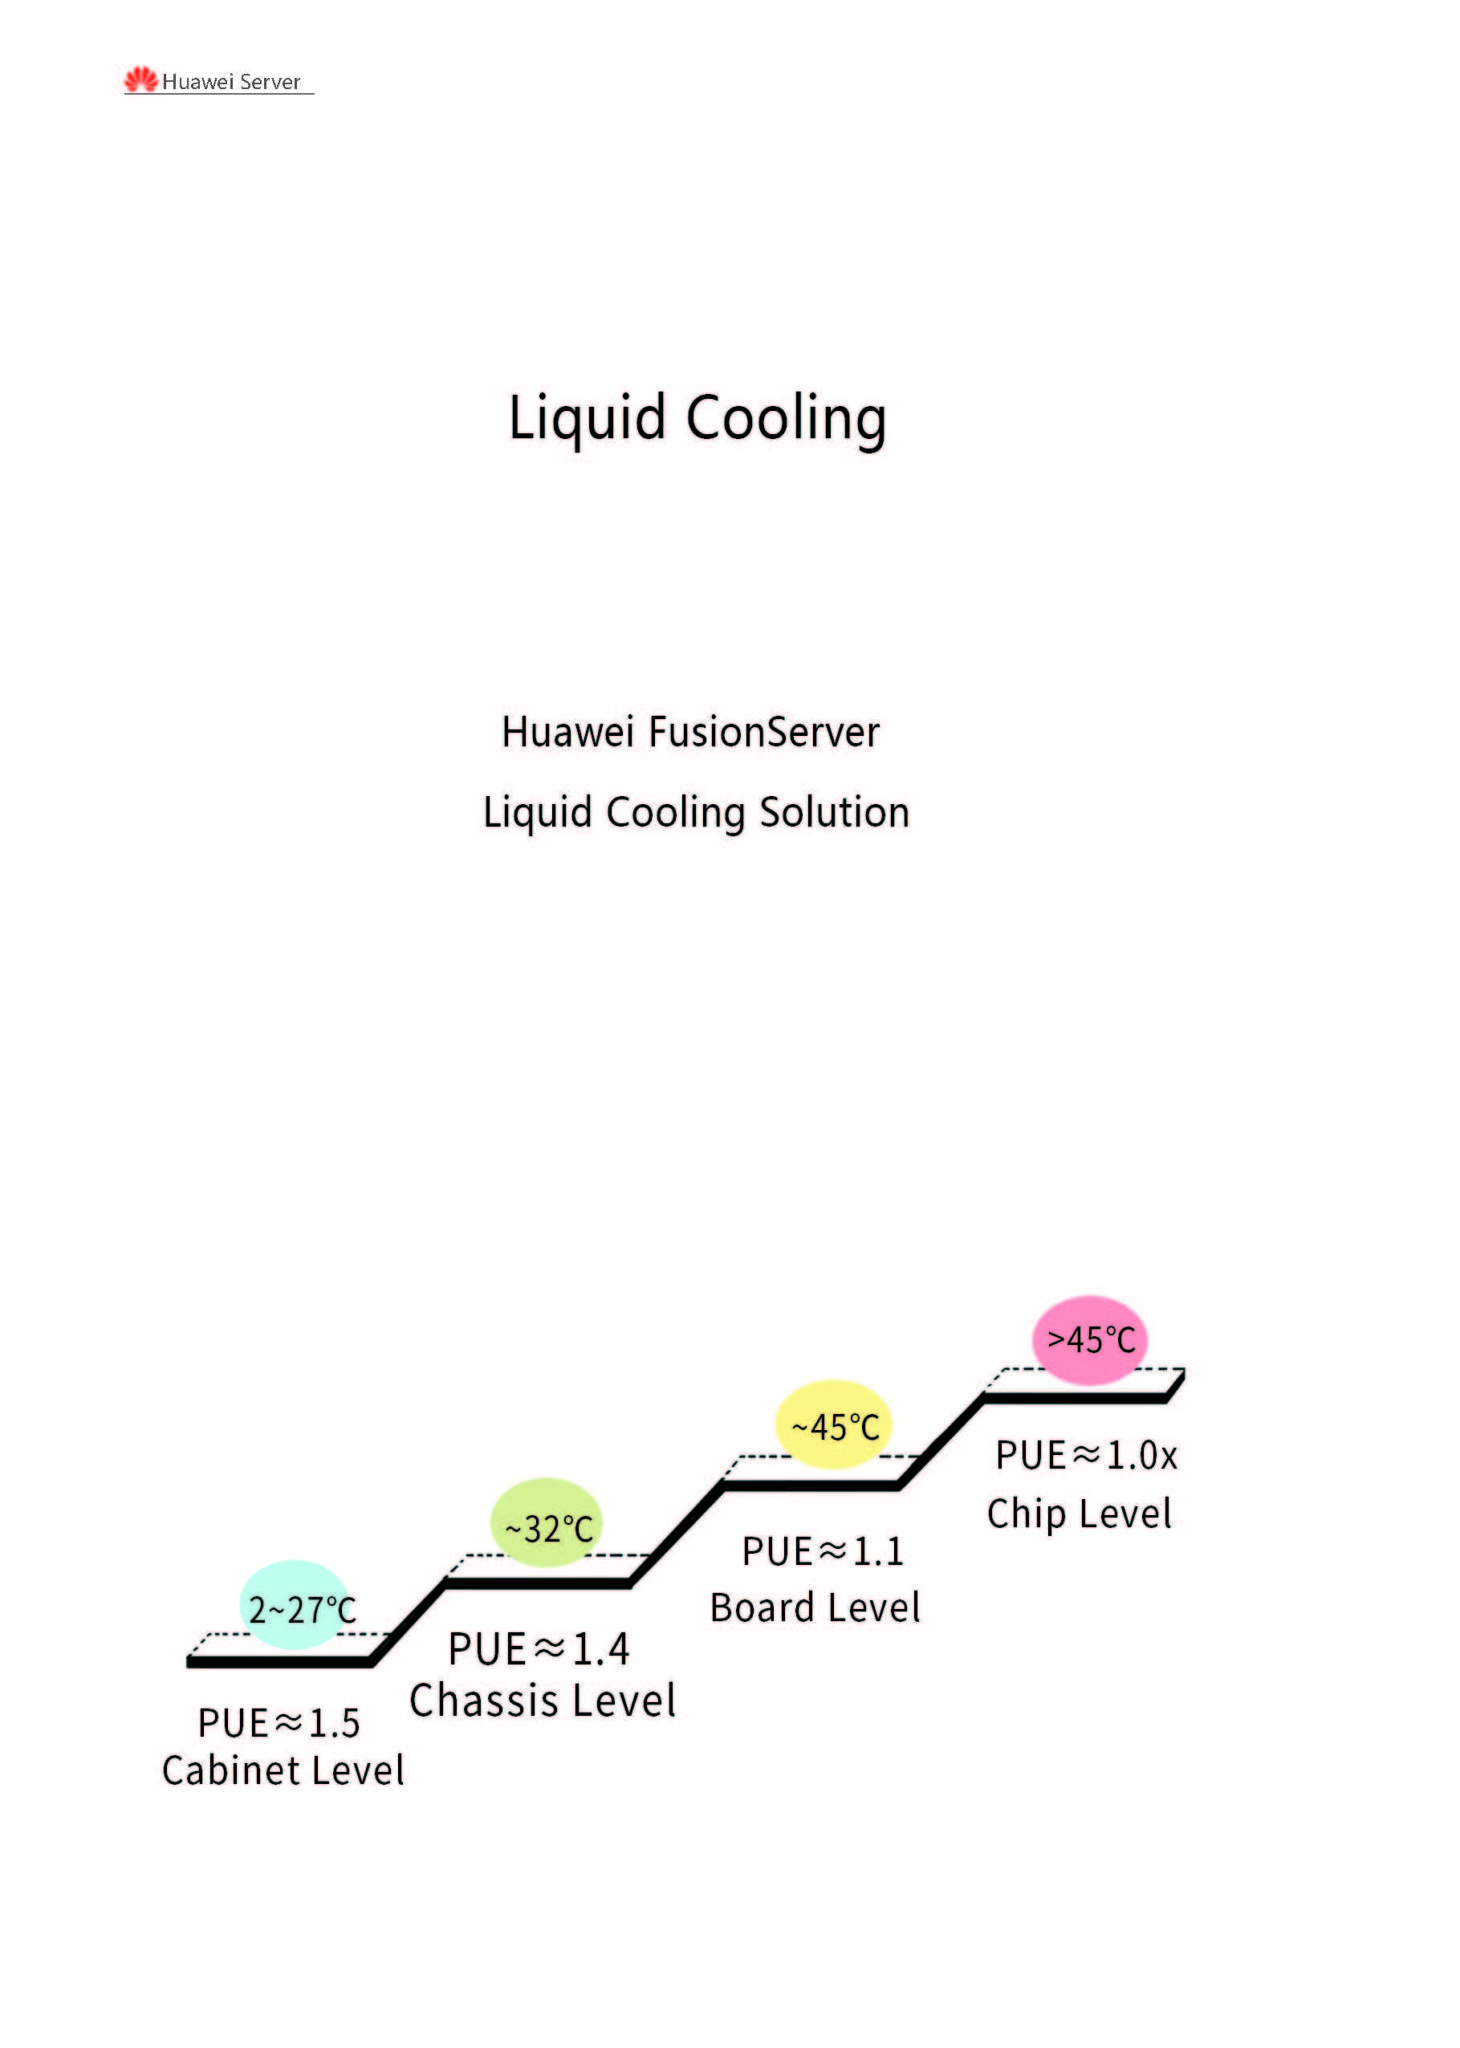 Huawei Server Innovation Genes – Liquid Cooling